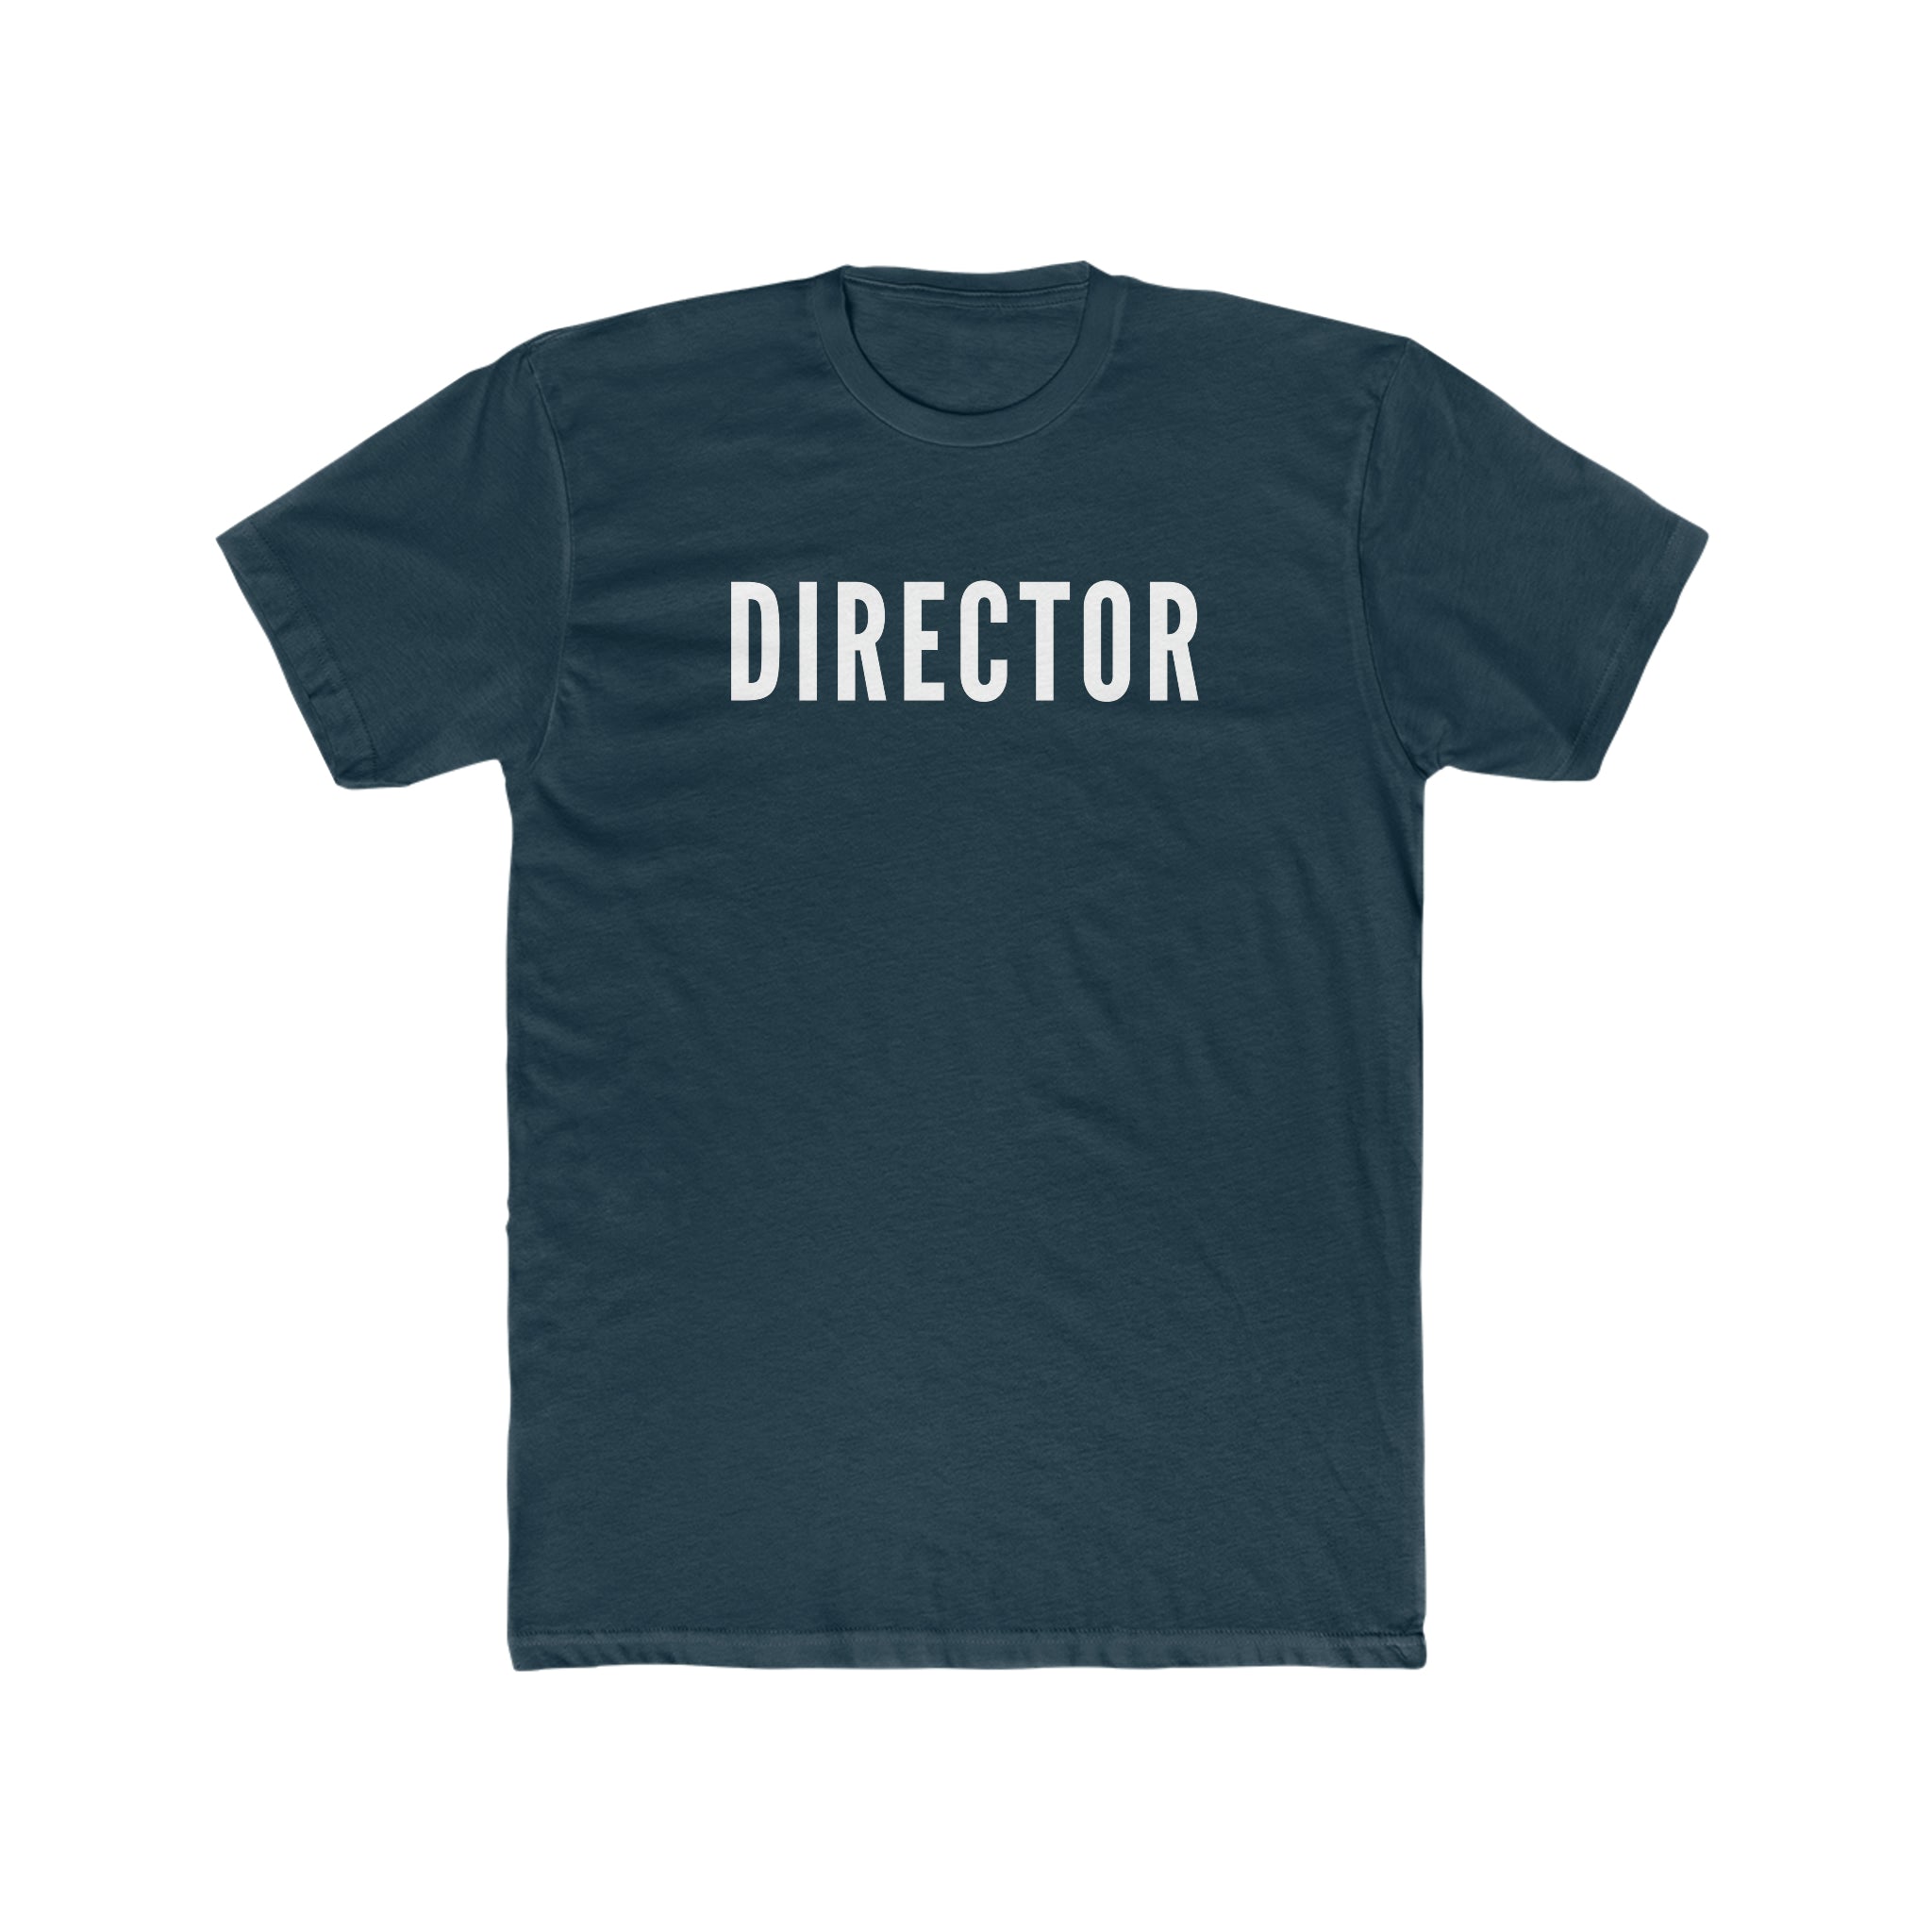 "Director" t-shirt - Classic fit